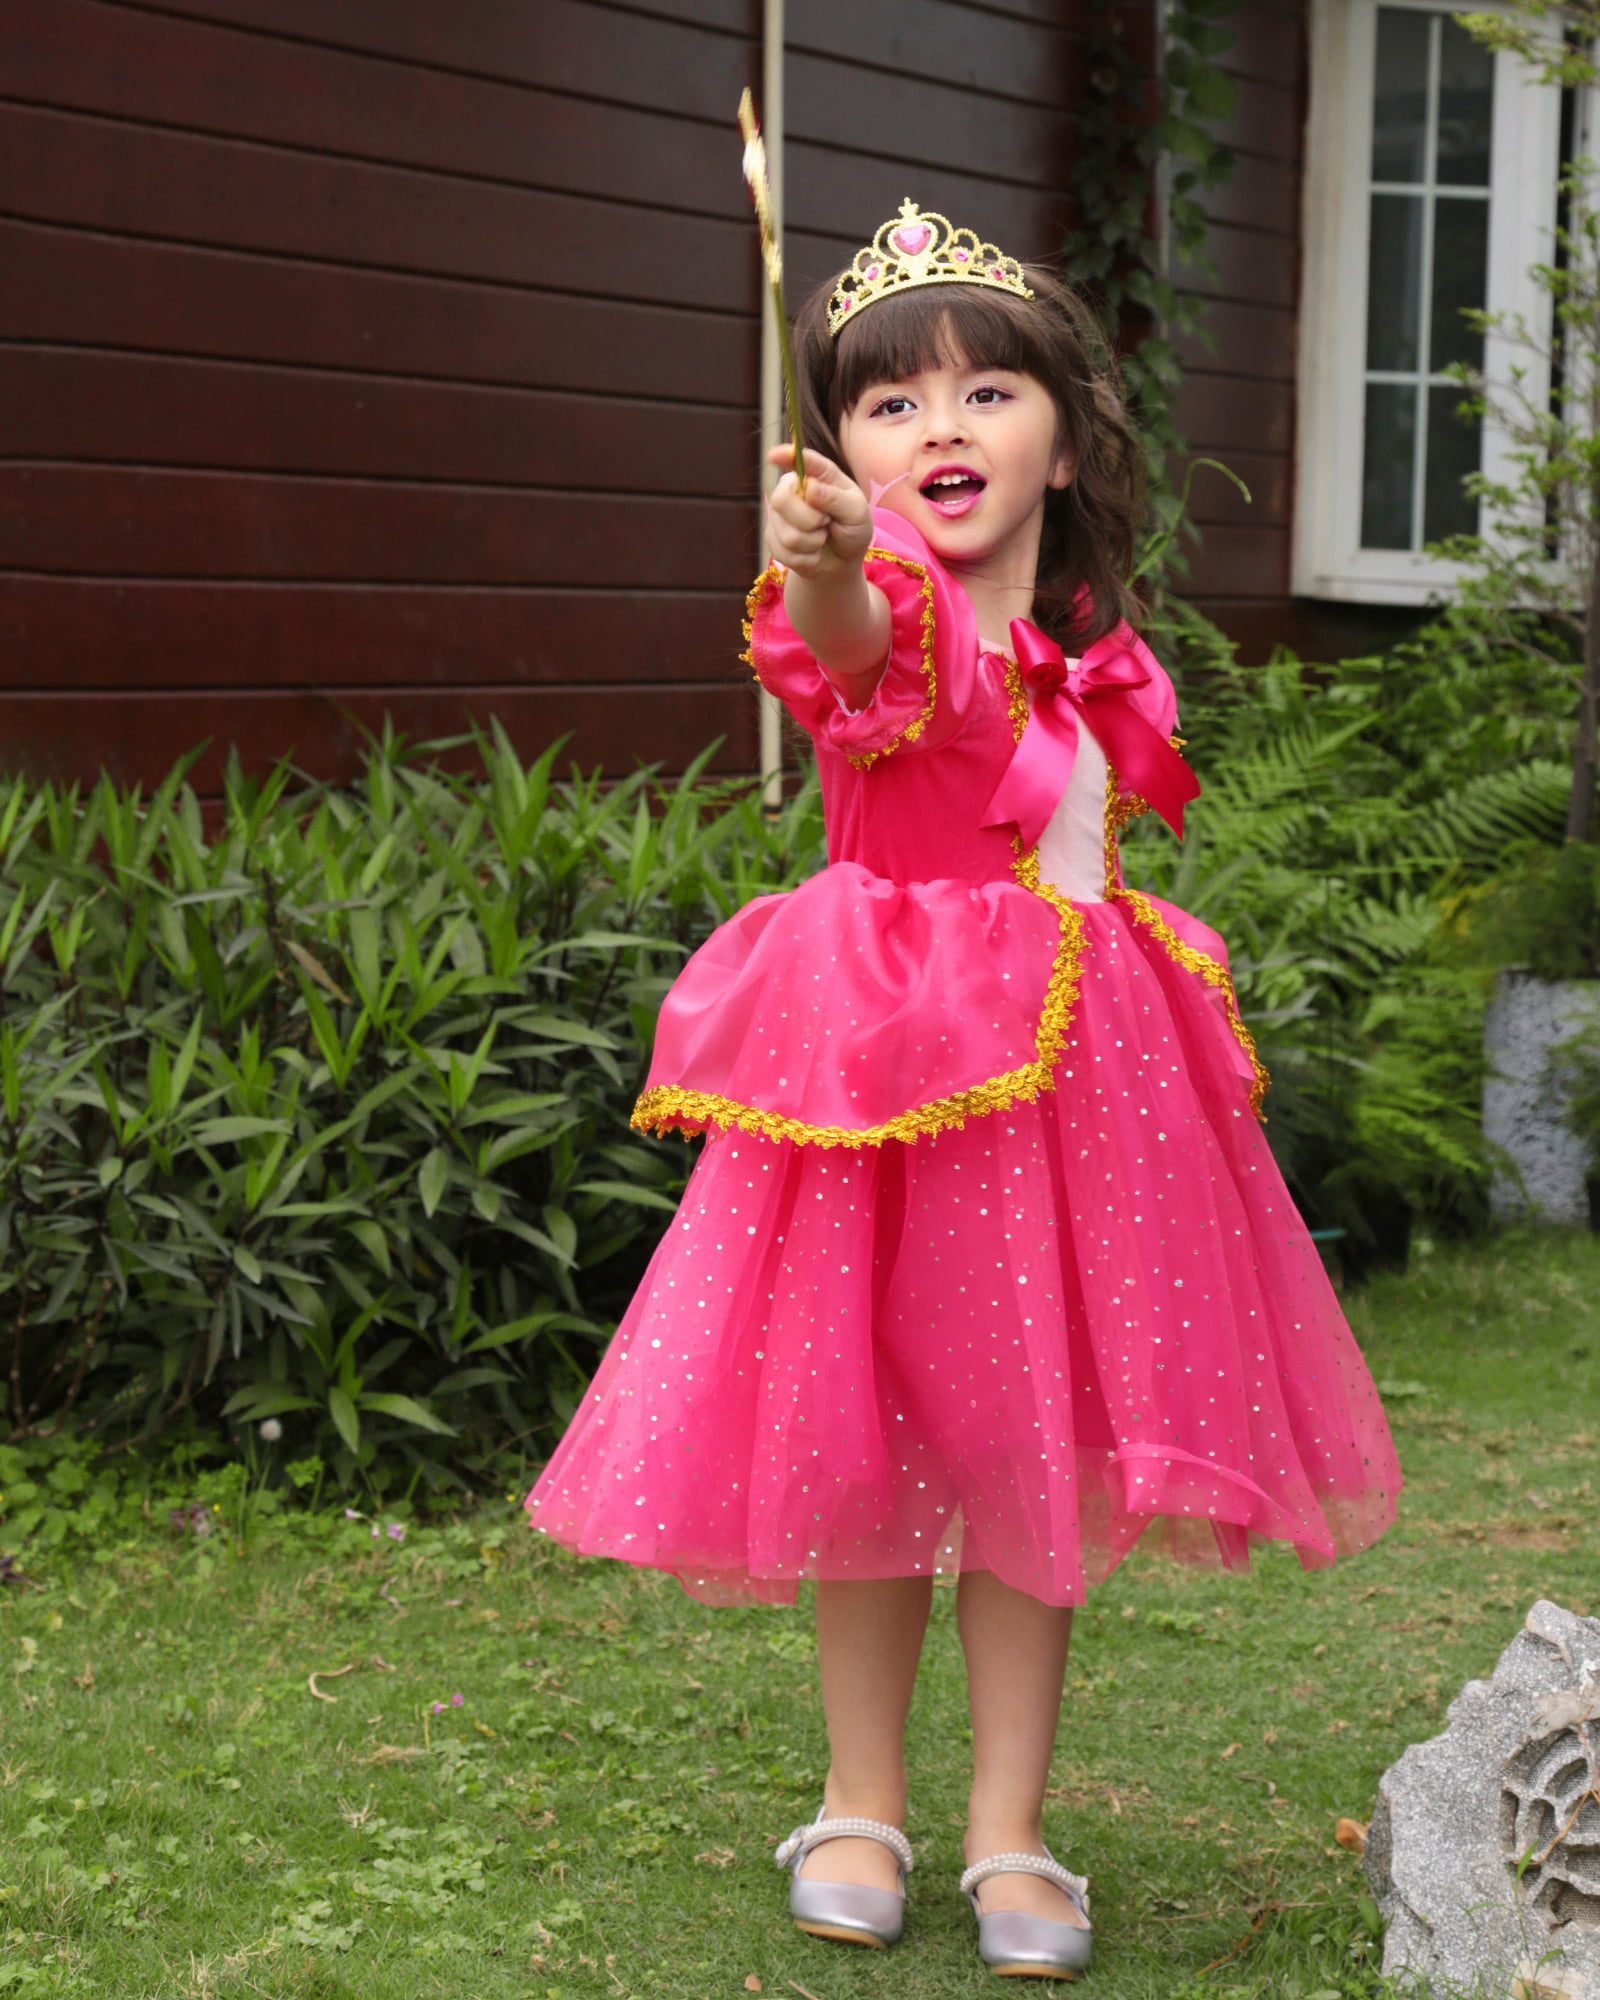 5T-6 YEARS Girls Royal Pink Princess Aurora Sleeping Beauty Dress Kids  Costume